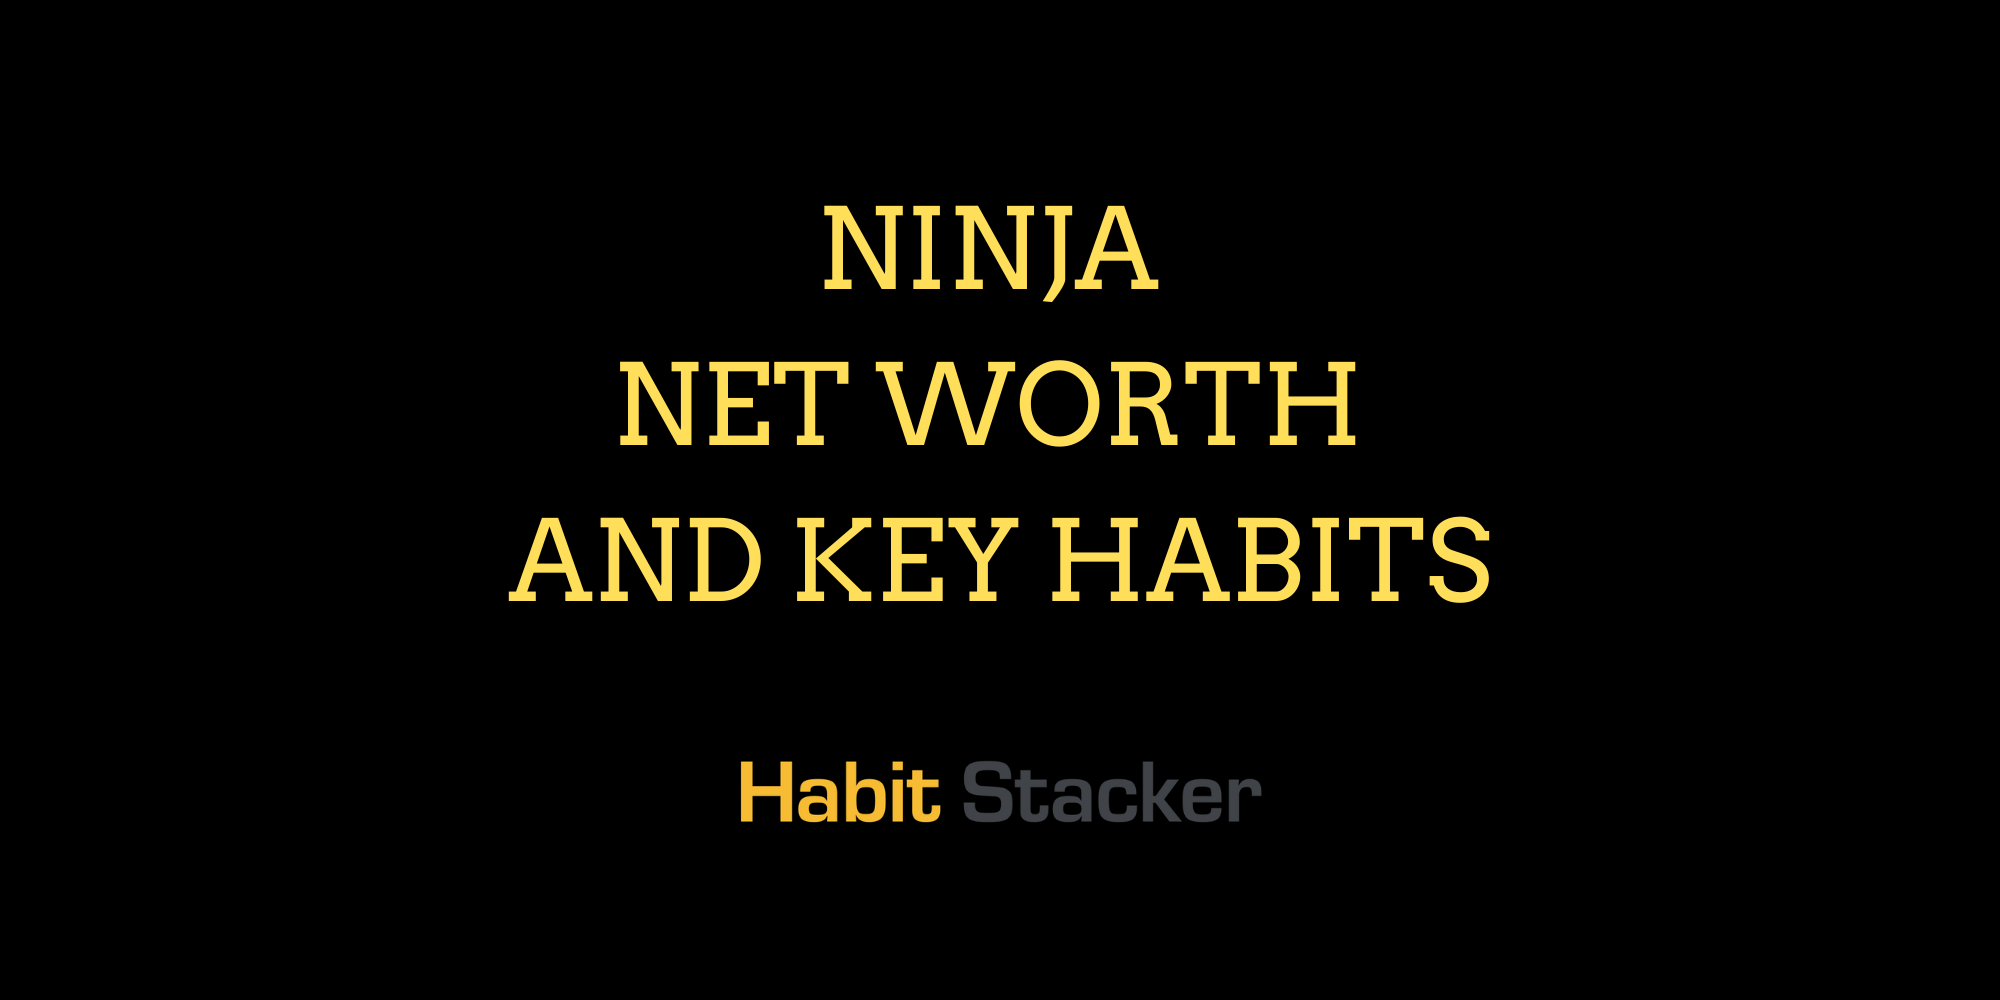 Ninja Net Worth And Key Habits